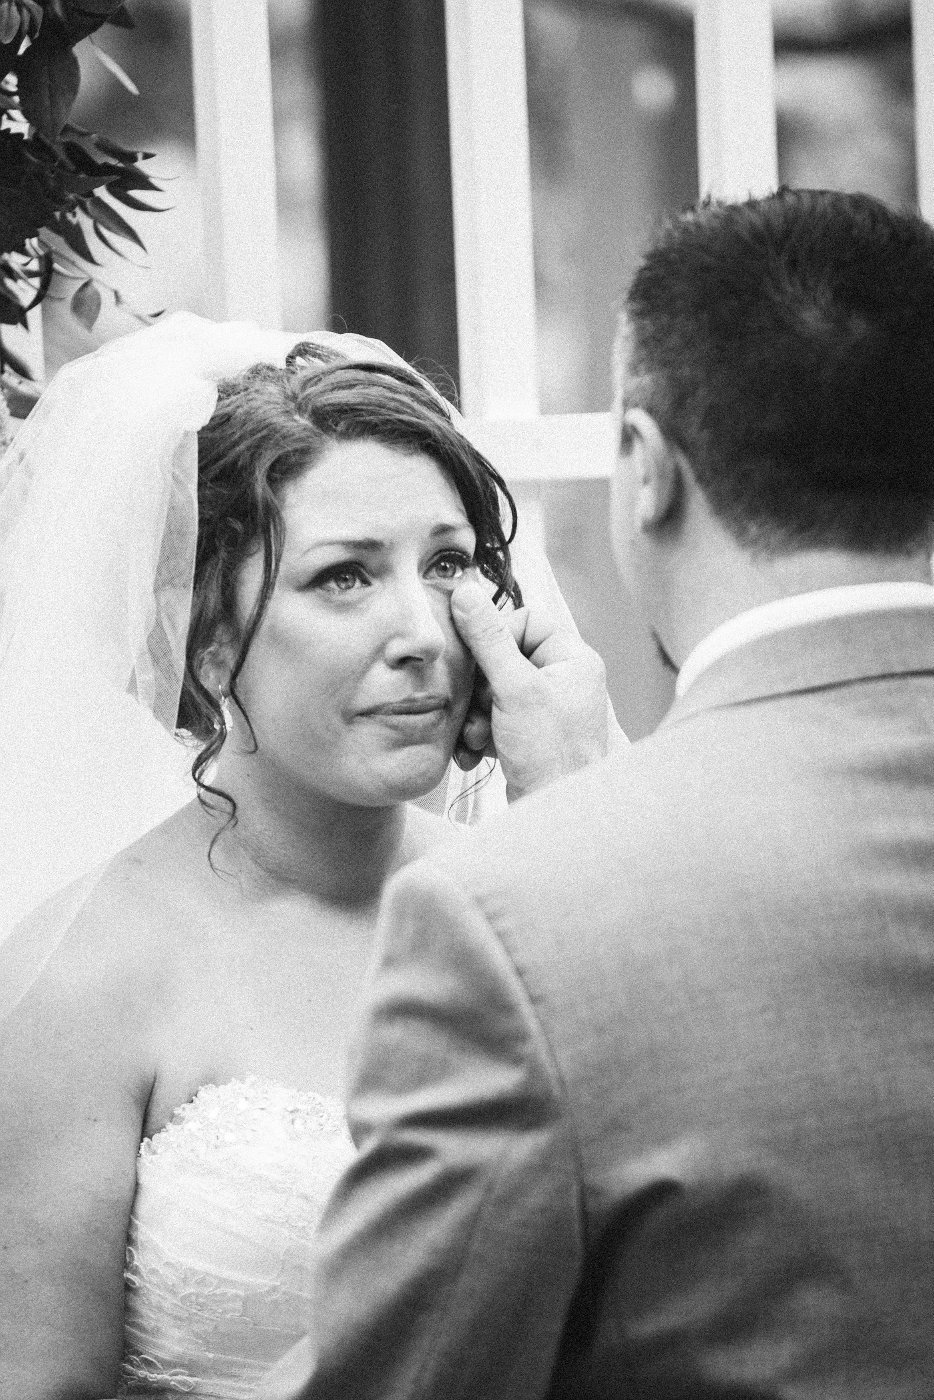 Groom wiping tear from bride